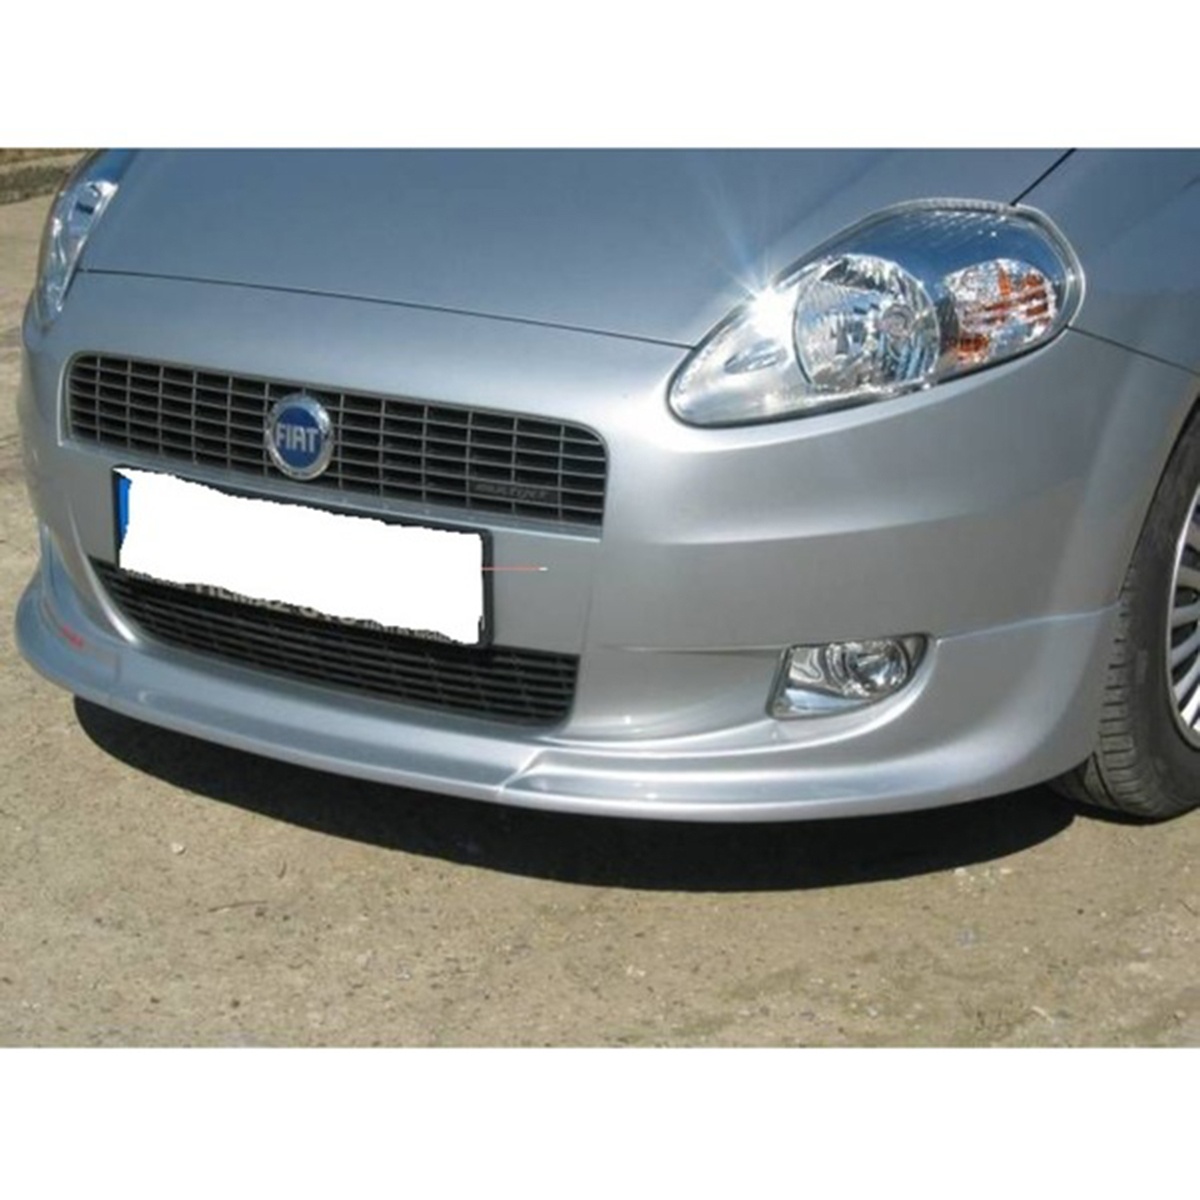 Fiat Punto 2006-2012 Ön Ek Fiber Boyasız